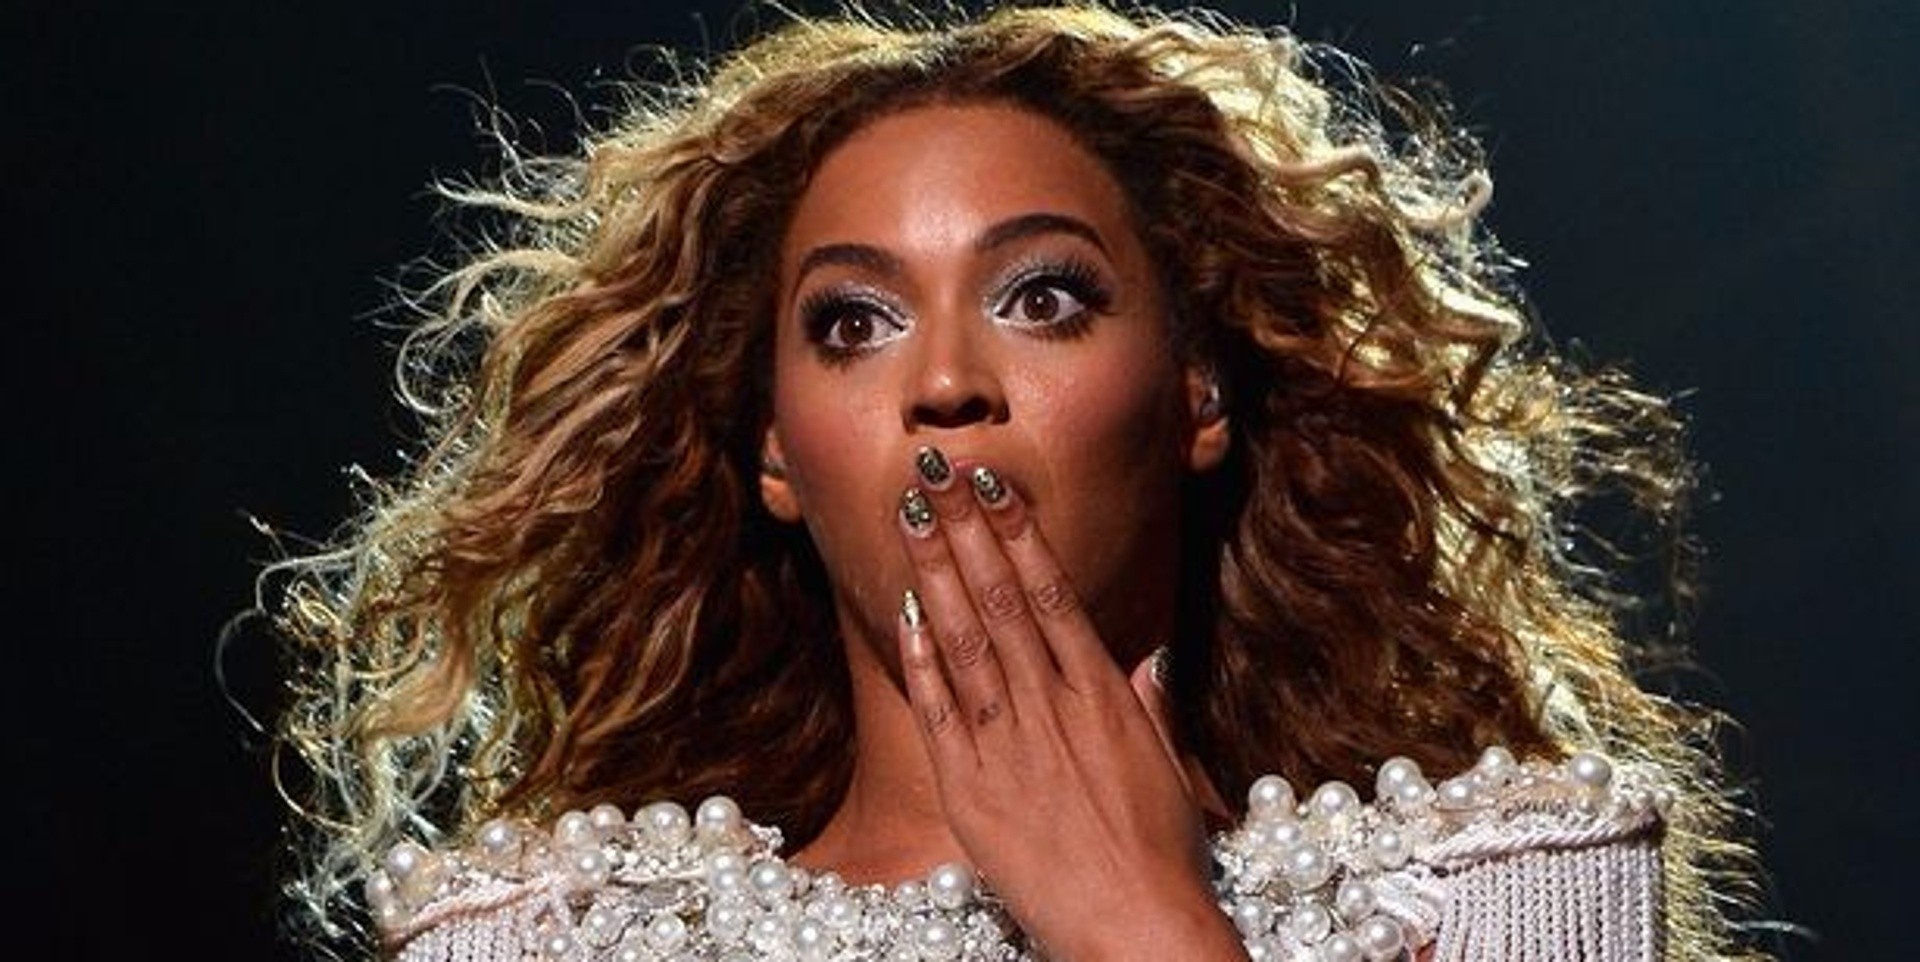 Vinyl copies of Beyonce's Lemonade were mistakenly pressed with punk rock music